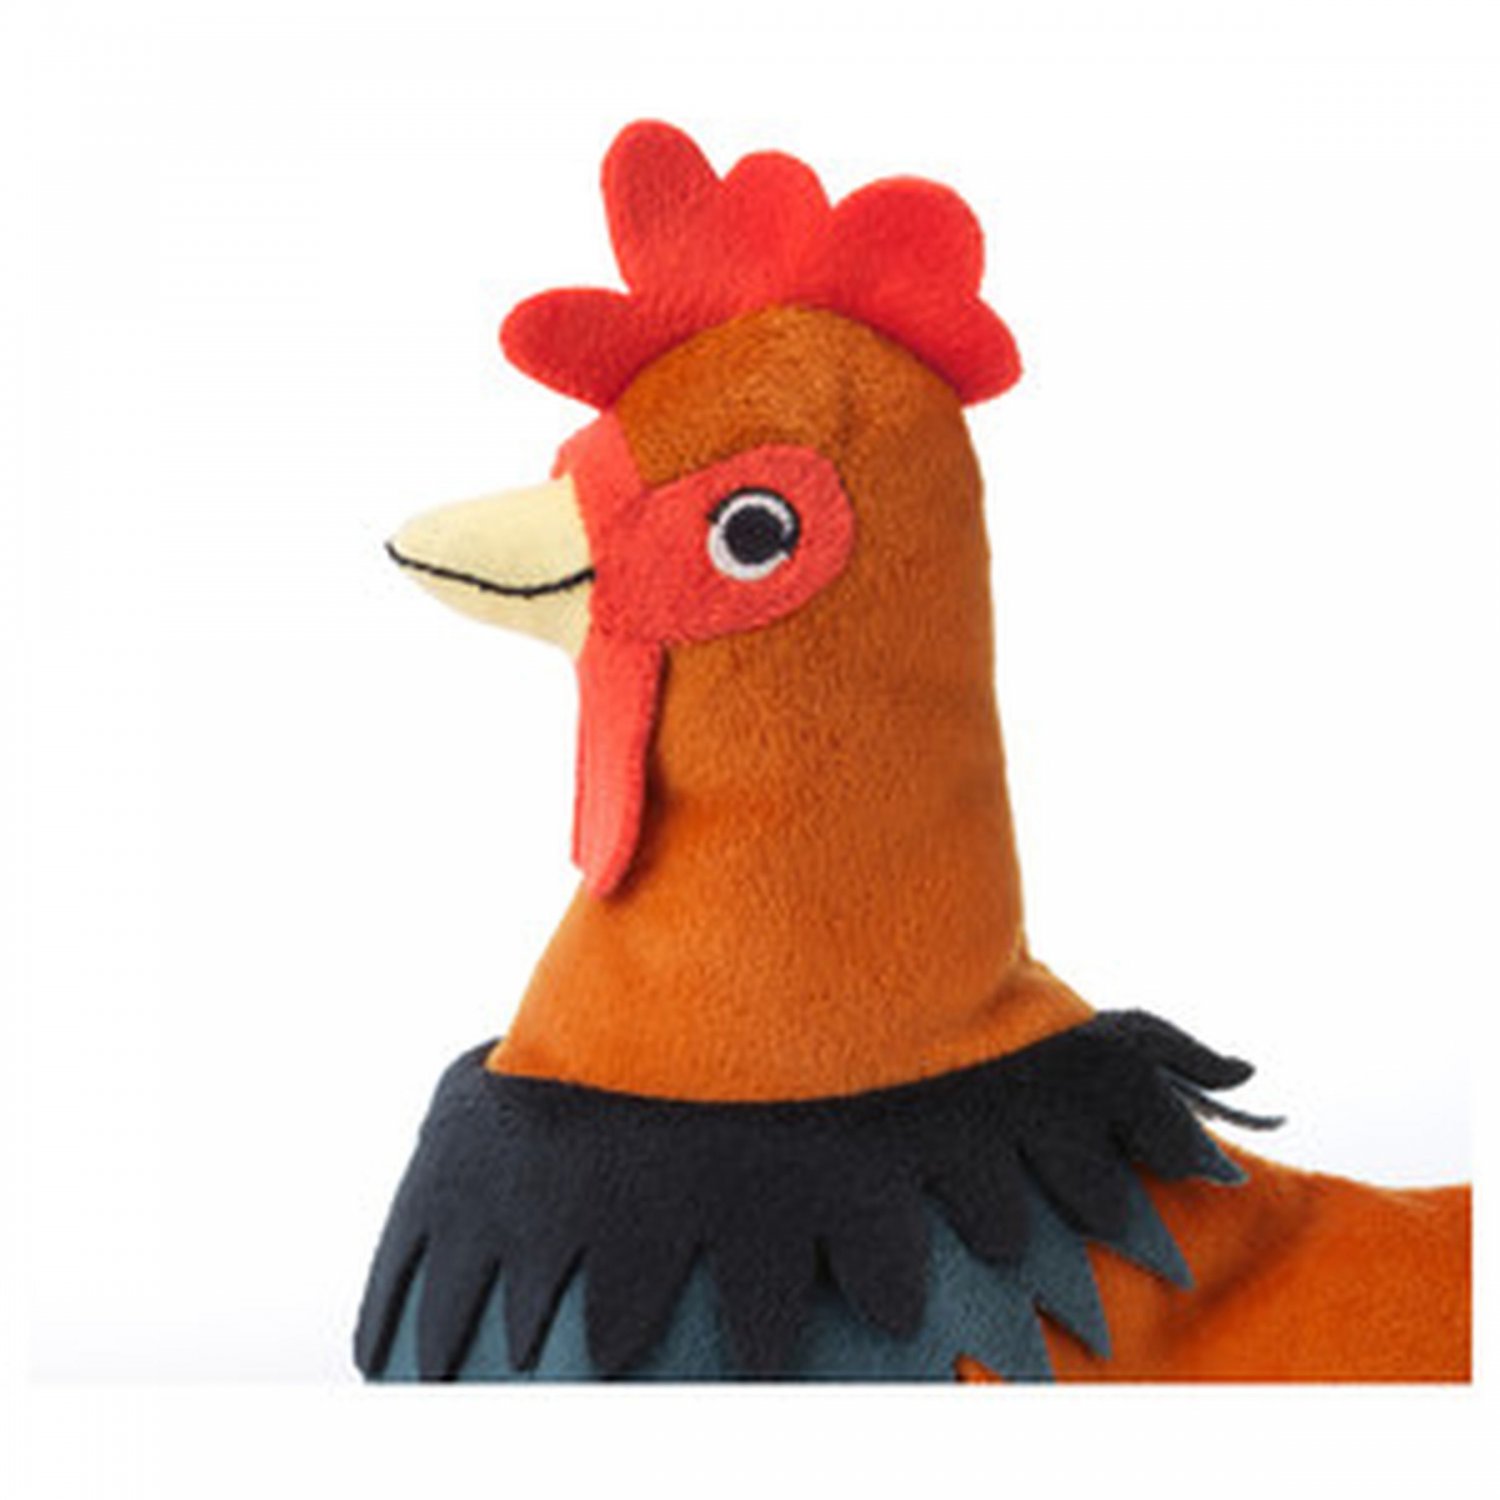 IKEA Onskad ROOSTER Chicken Soft Plush Toy ÖNSKAD Bird Xmas NWT